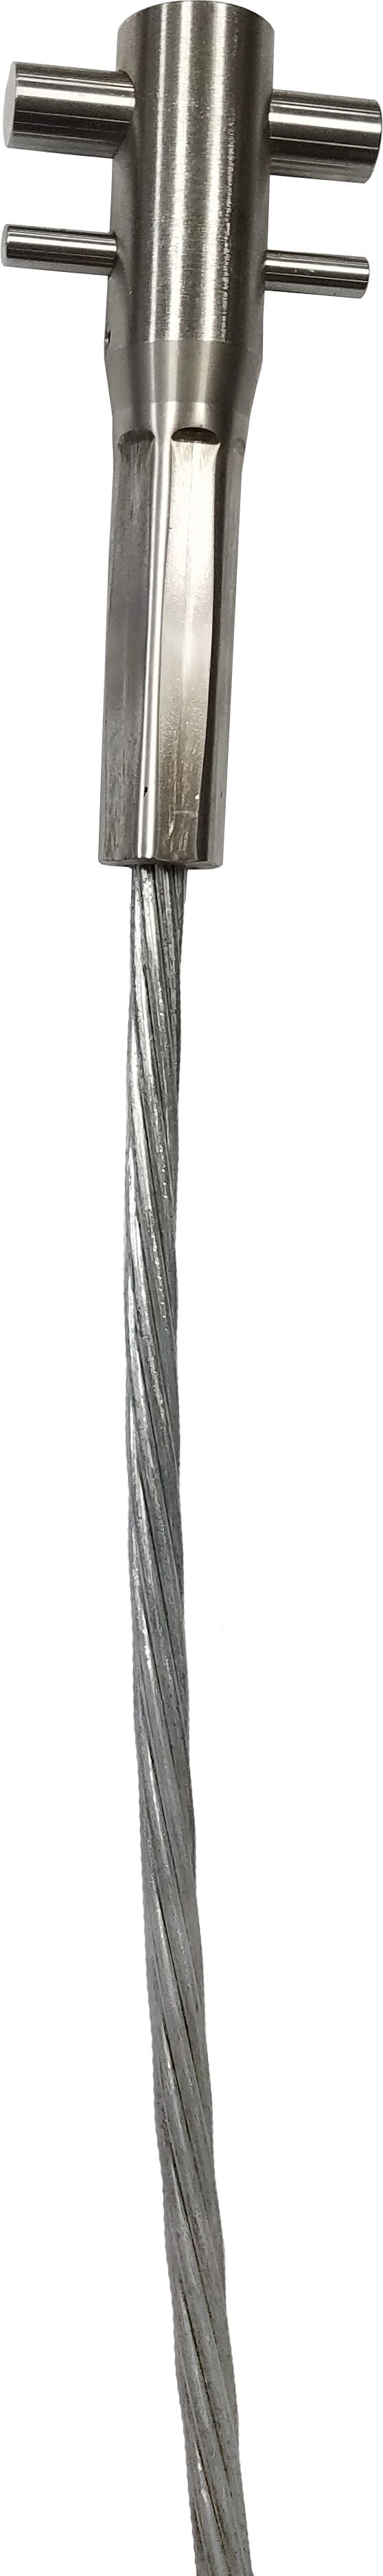 3M™ DBI-SALA® Lad-Saf™ Swaged Cable 6115004, 3/8 Inch, Galvanized Steel, 12m_0